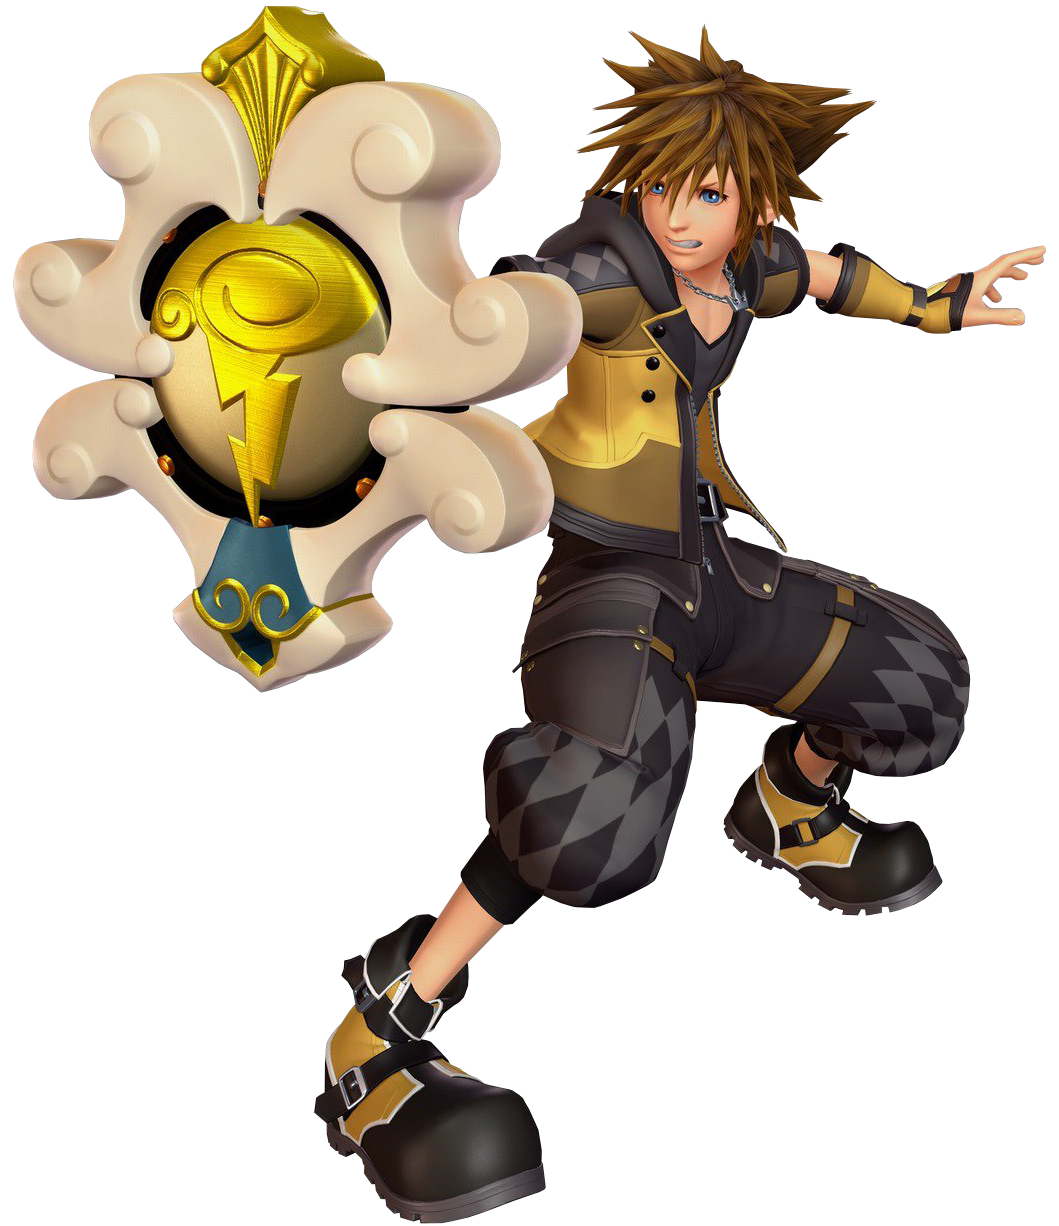 File:Sora (Guardian Form) KHIII.png - Kingdom Hearts Wiki, the Kingdom ...